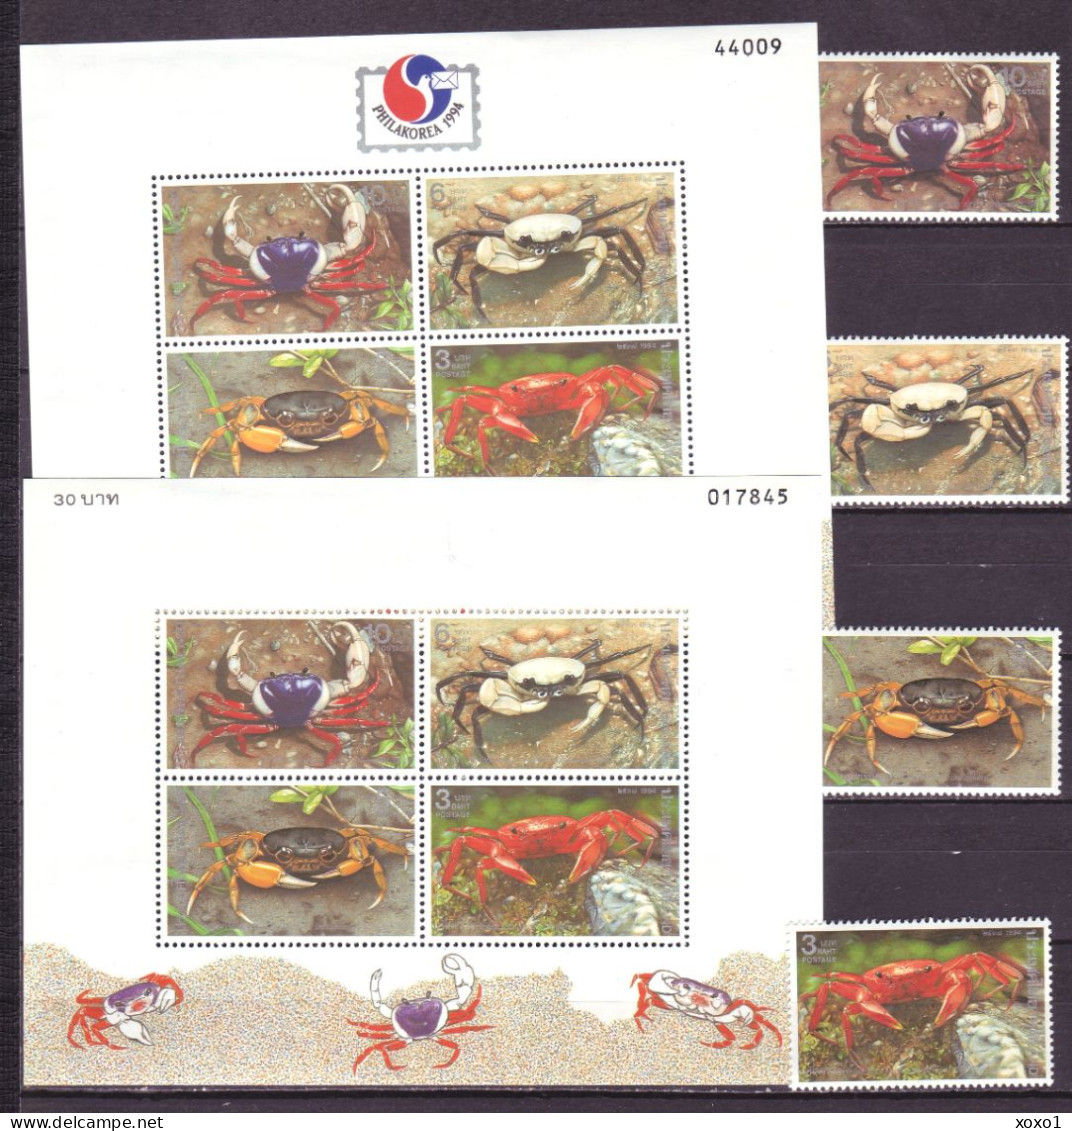 Thailand 1994 MiNr. 1603 - 1606 ( Block 58-58 I ) Marine Life, Crustaceans, Crabs 4v+2s\sh  MNH** 17,20 € - Crostacei